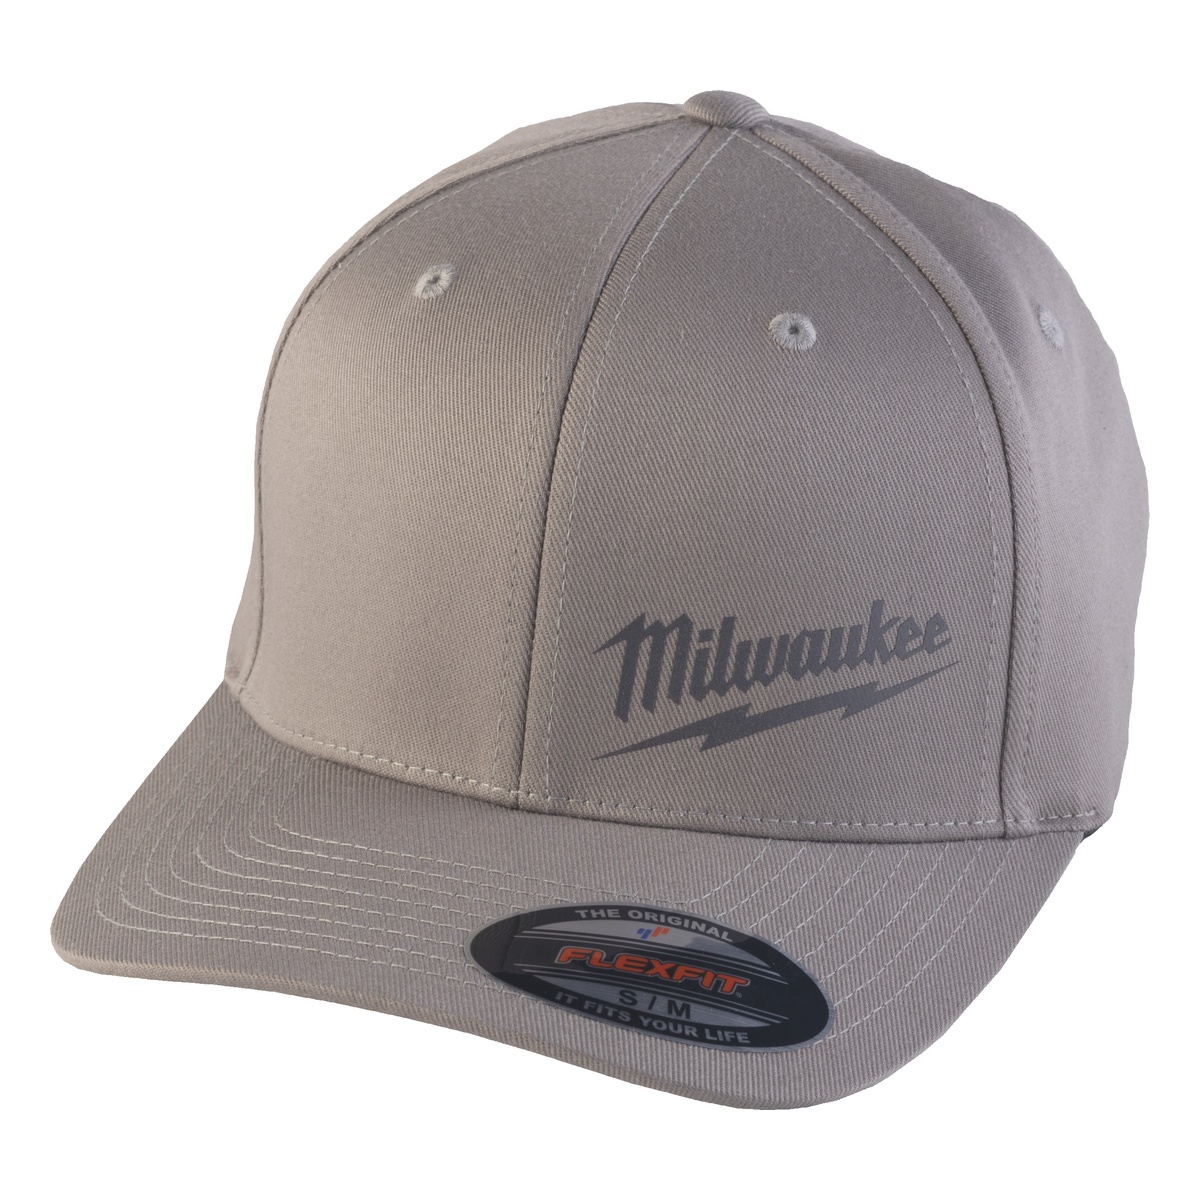 Milwaukee Baseball Kappe grau Größe S/M mit UV-Schutz BCSGR-S/M - 1 Stk.